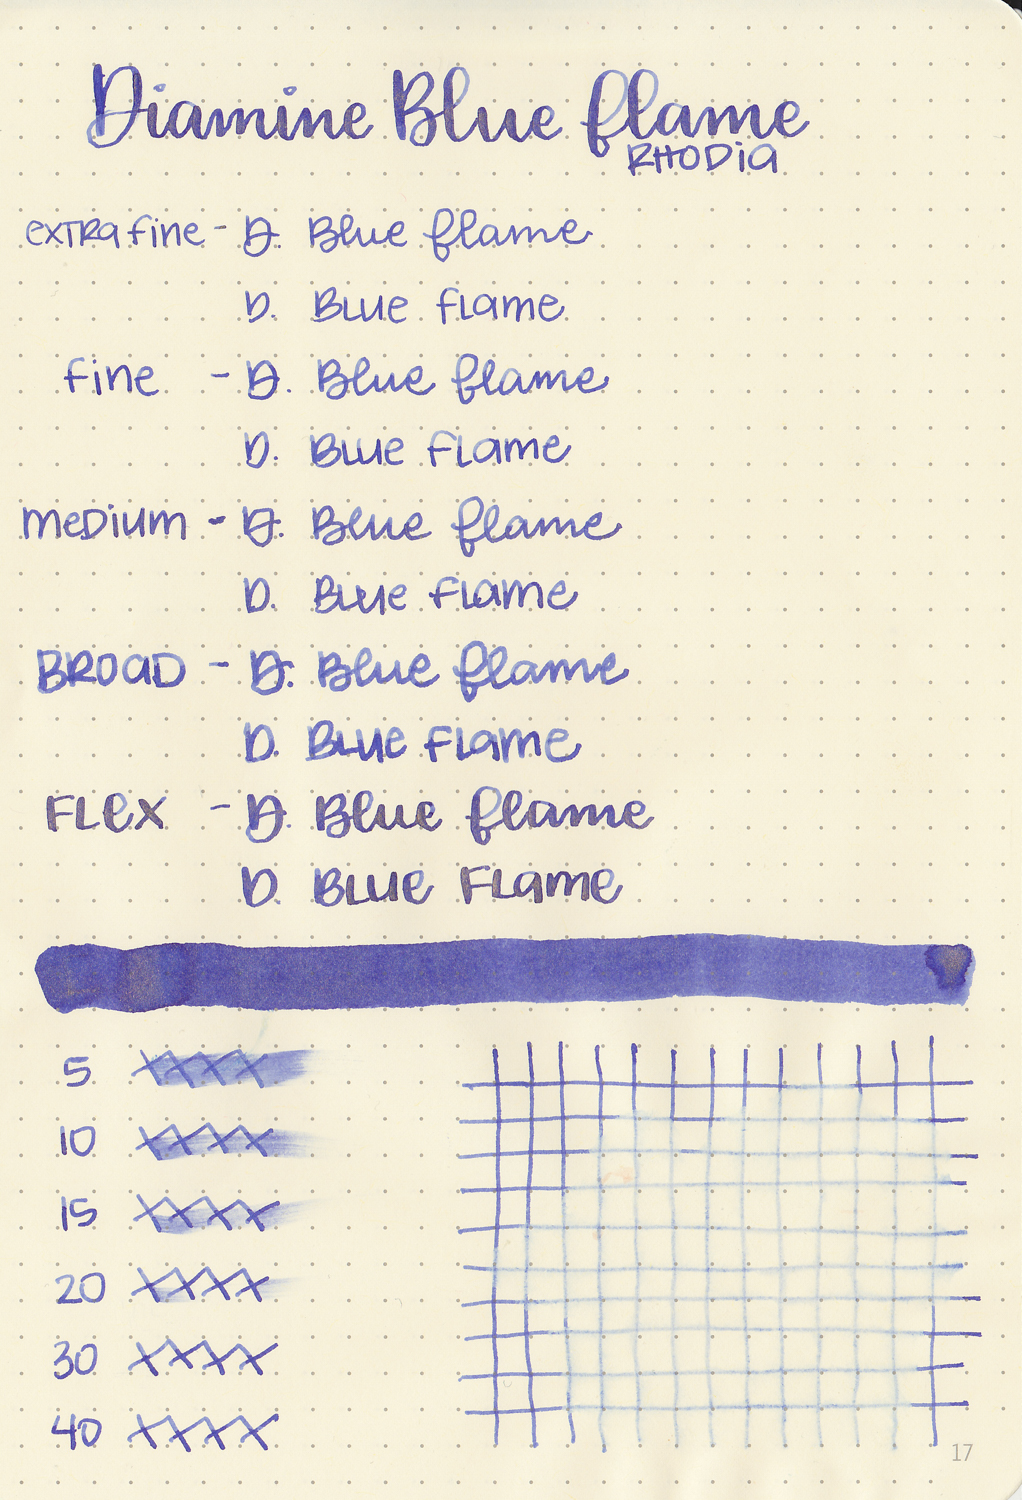 d-blue-flame-3.jpg